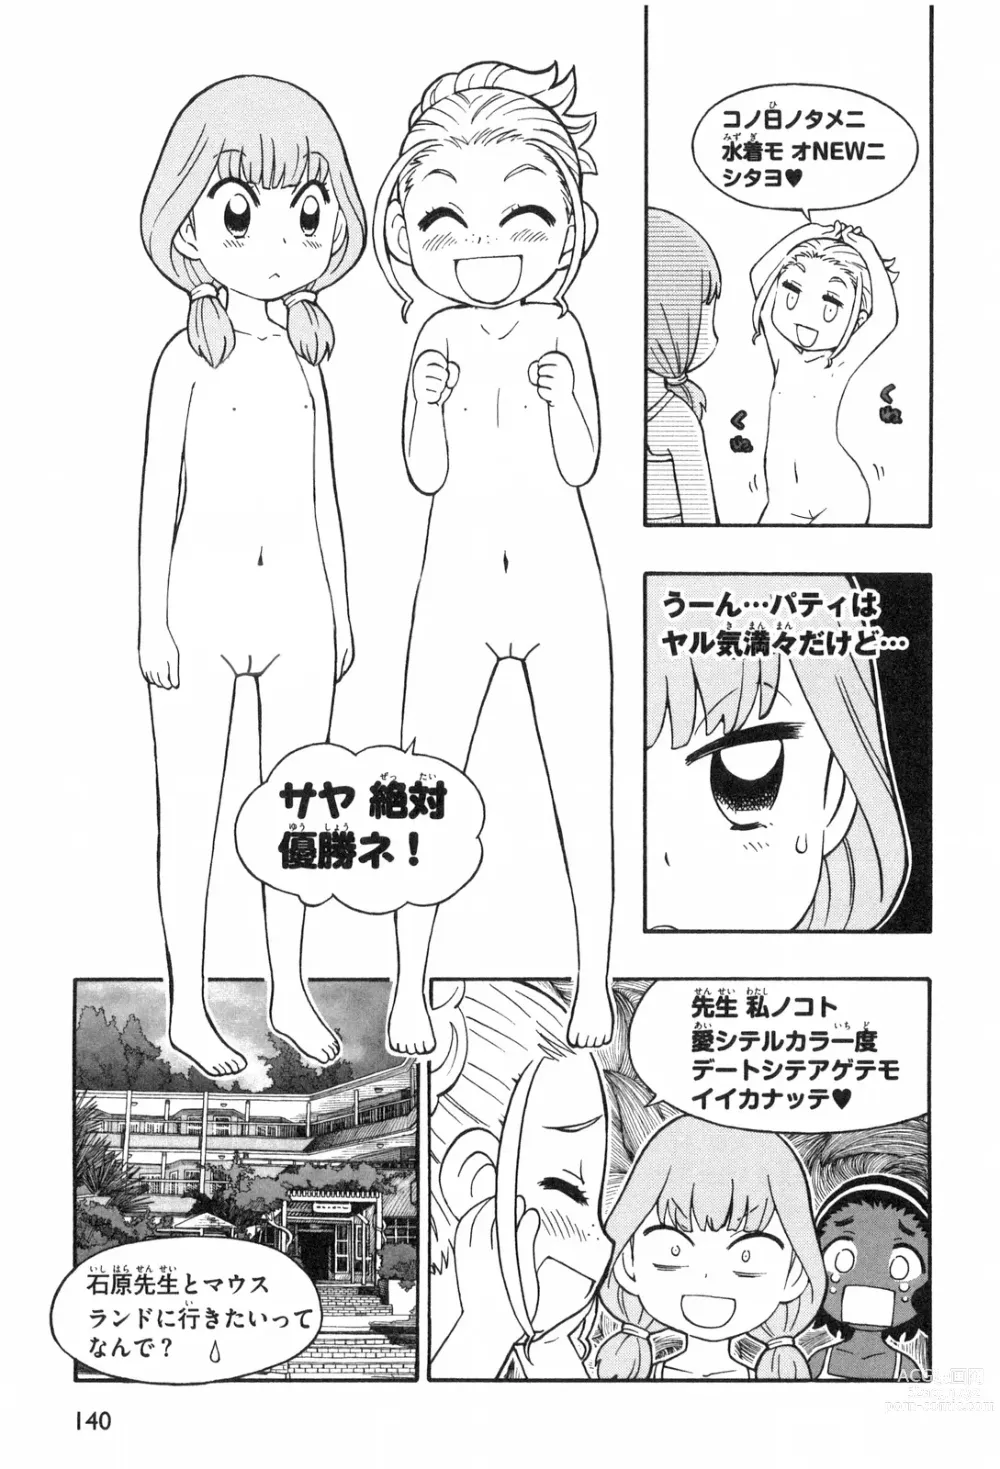 Page 17 of doujinshi Terao the Next Generation Machine